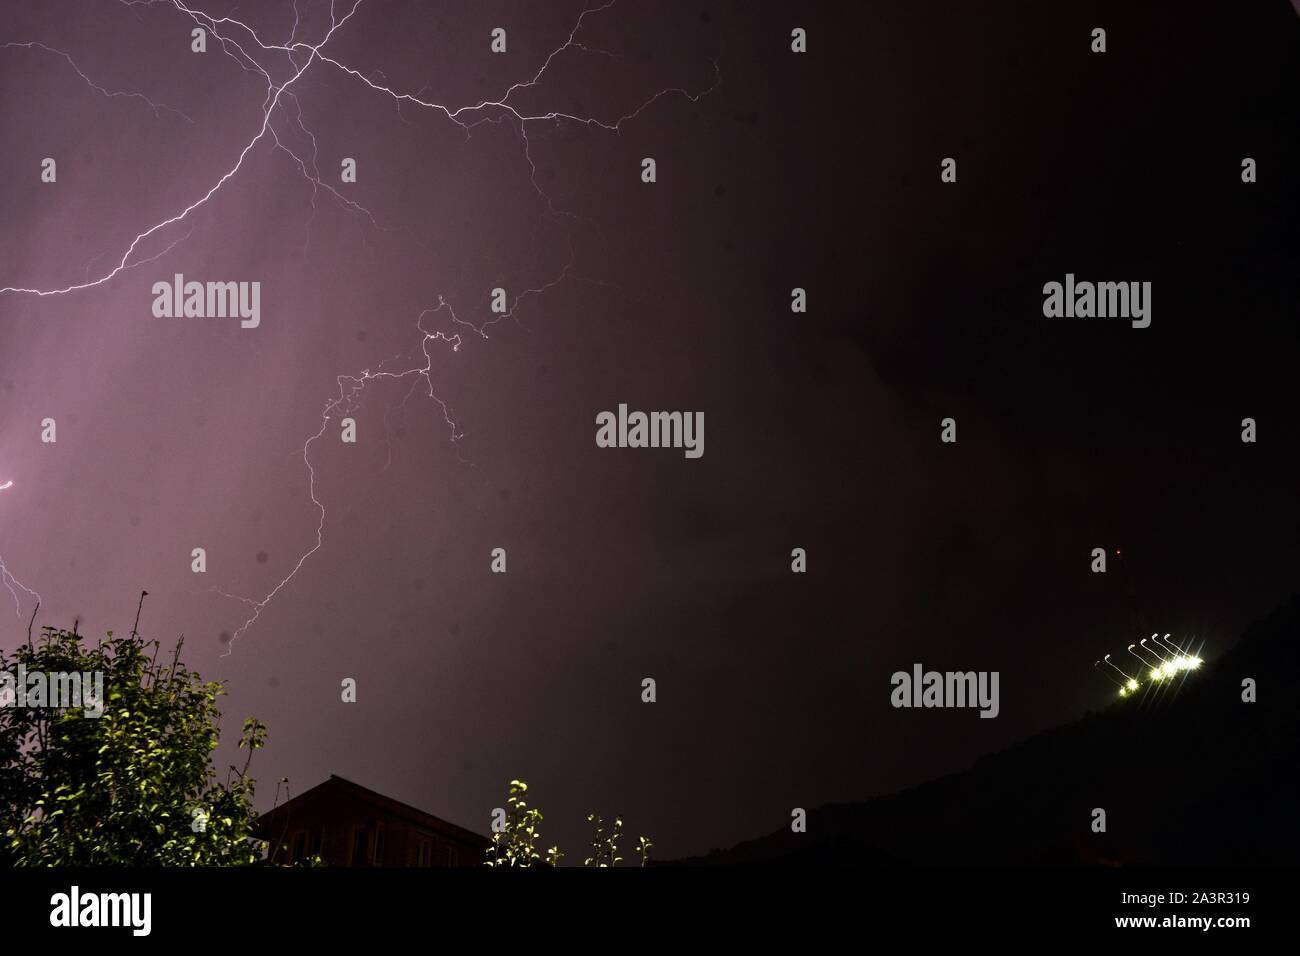 Lightning strikes during a thunderstorm in Srinagar, Kashmir. Stock Photo